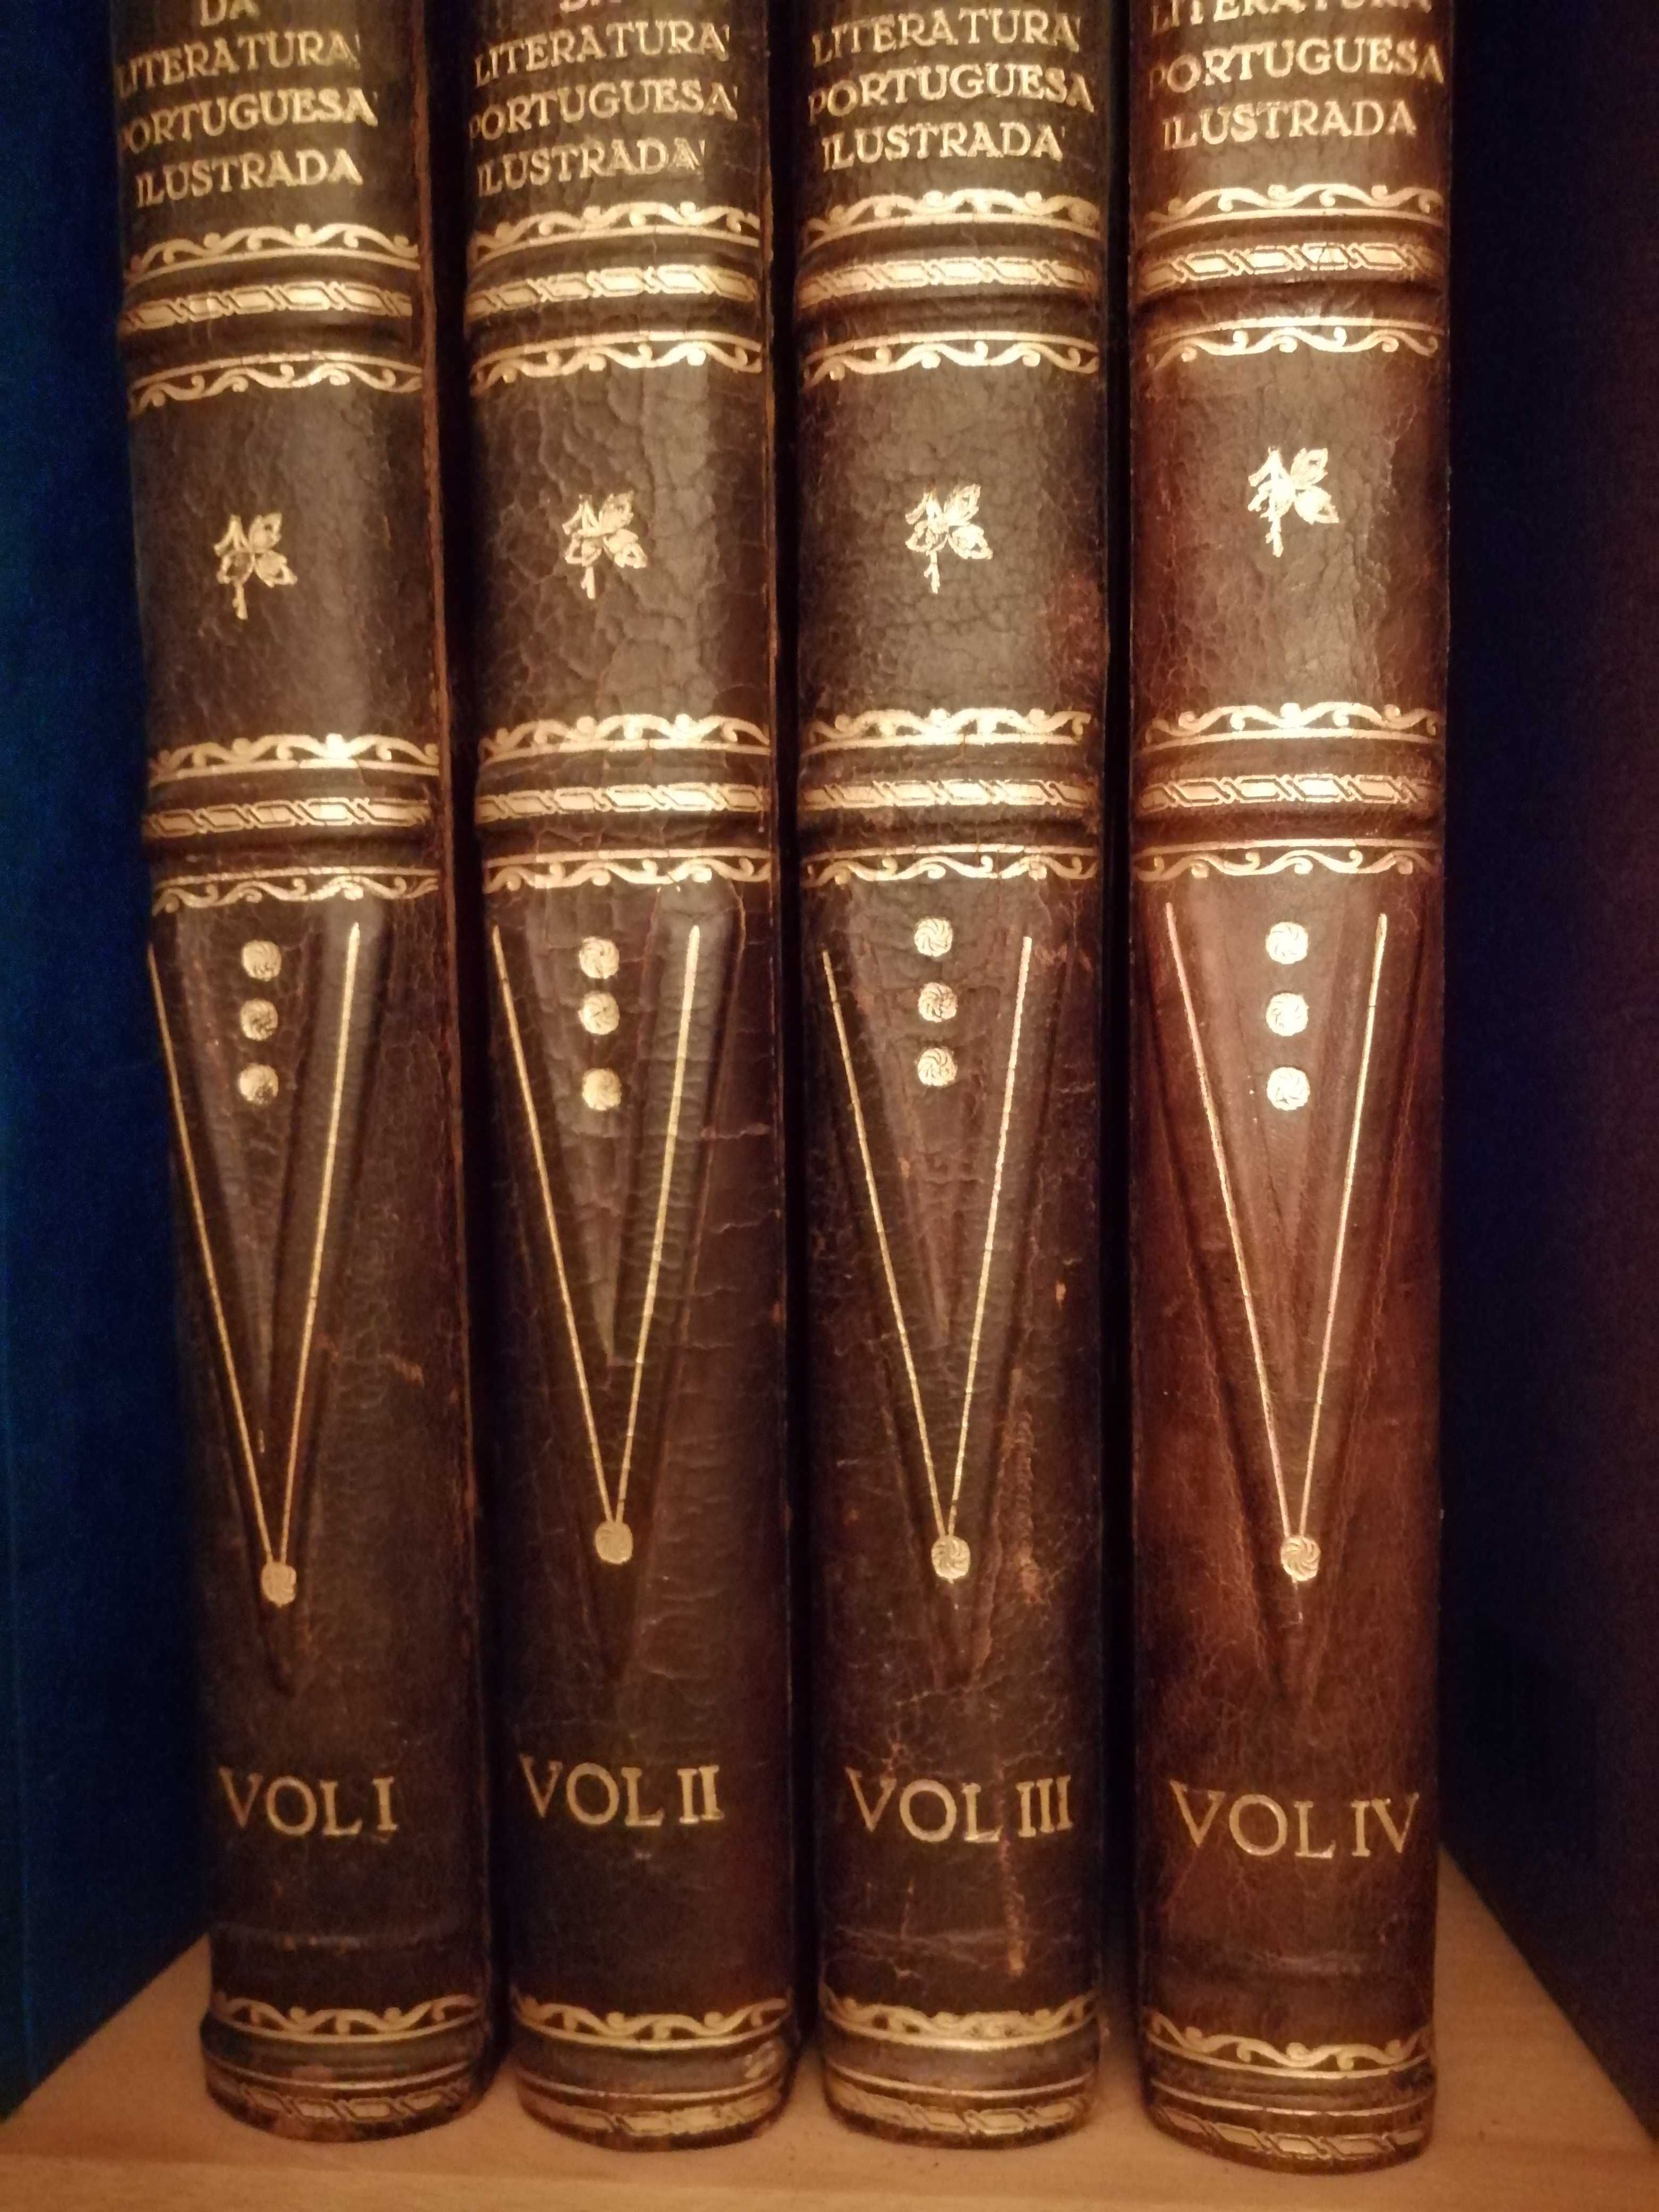 História da Literatura Portuguesa Ilustrada - Completa (IV volumes)